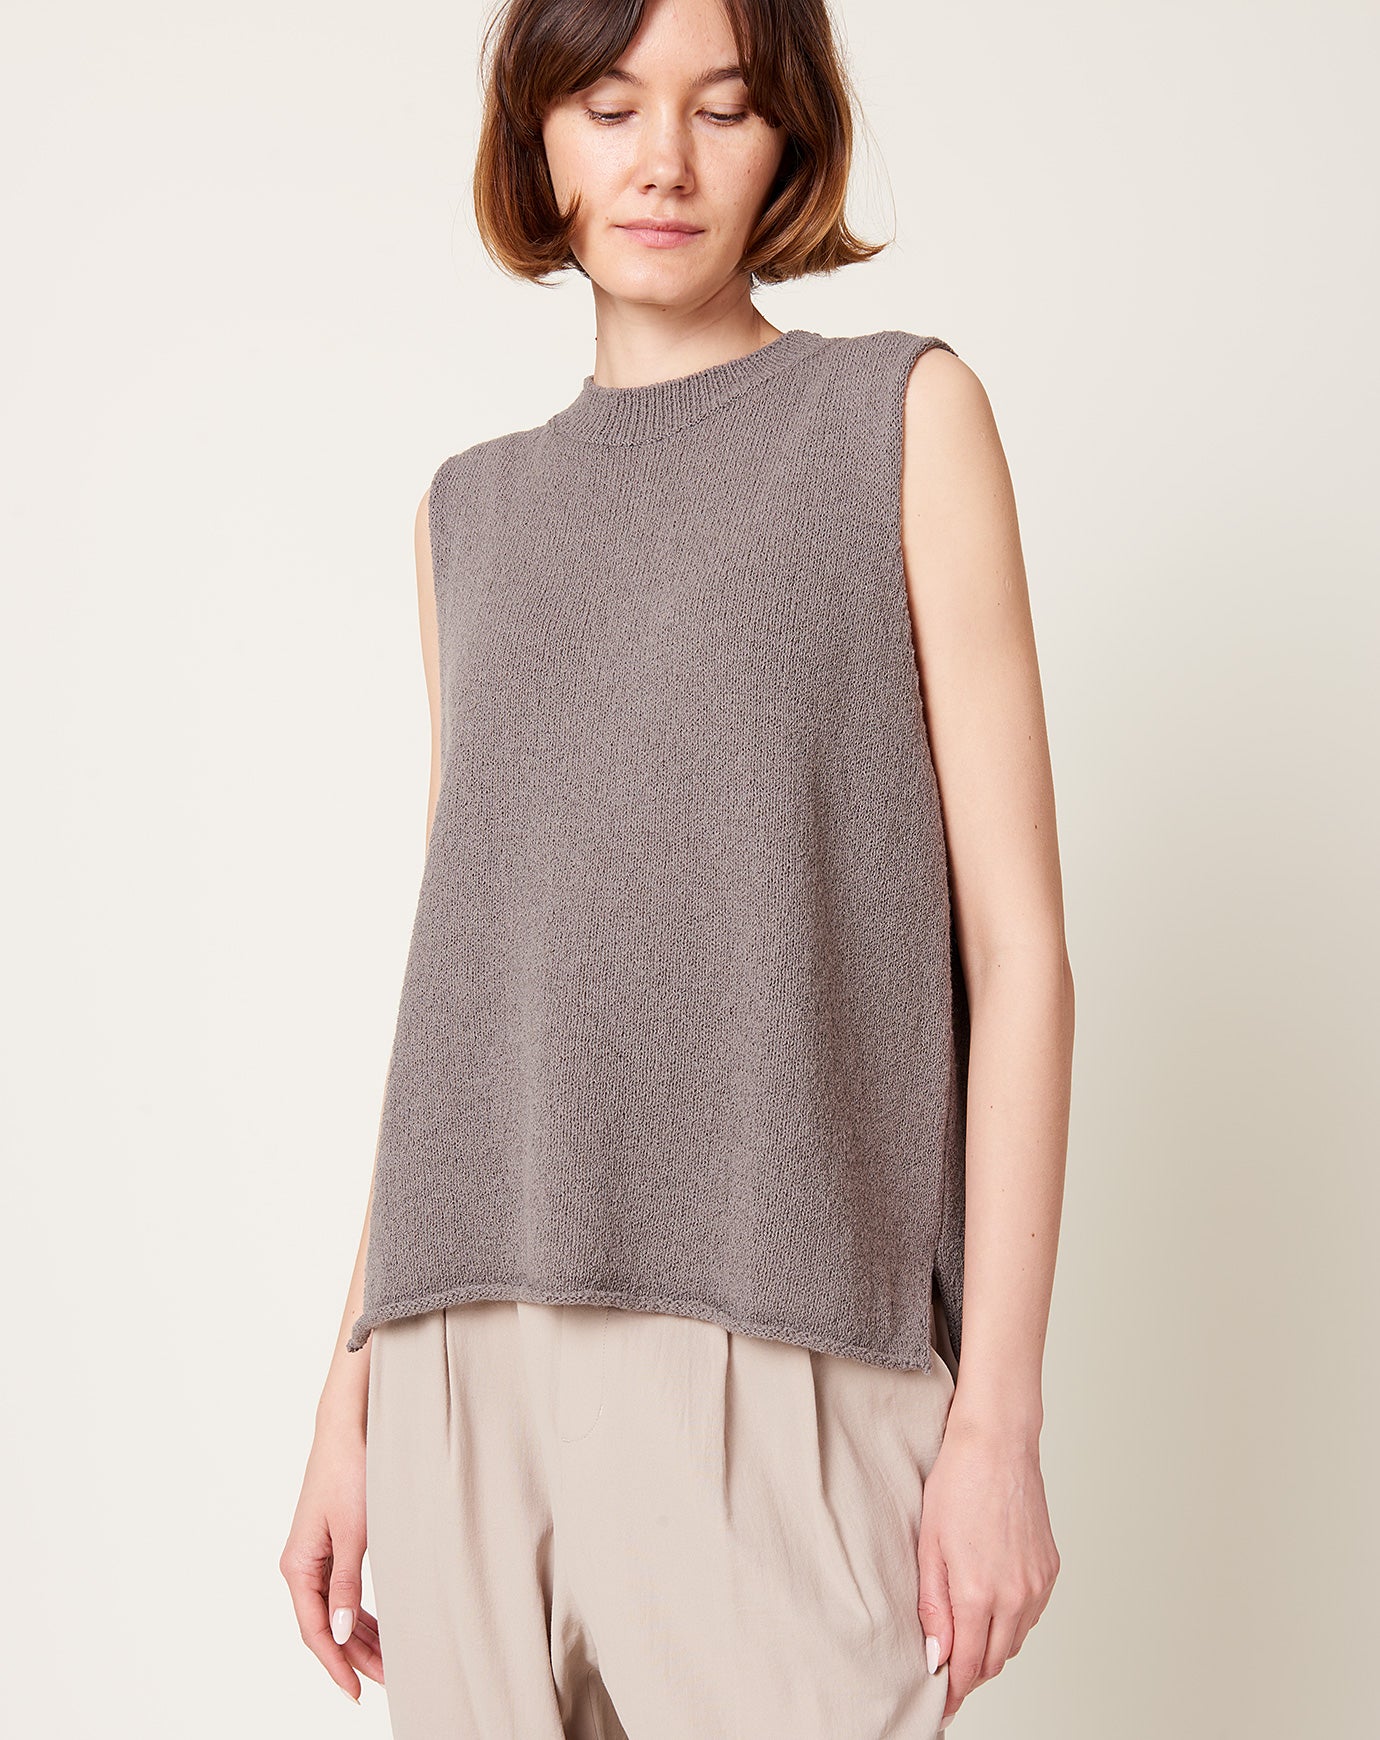 Evam Eva Cotton Cashmere Camisole in Gray  Cashmere, Cashmere knits,  Layering tanks